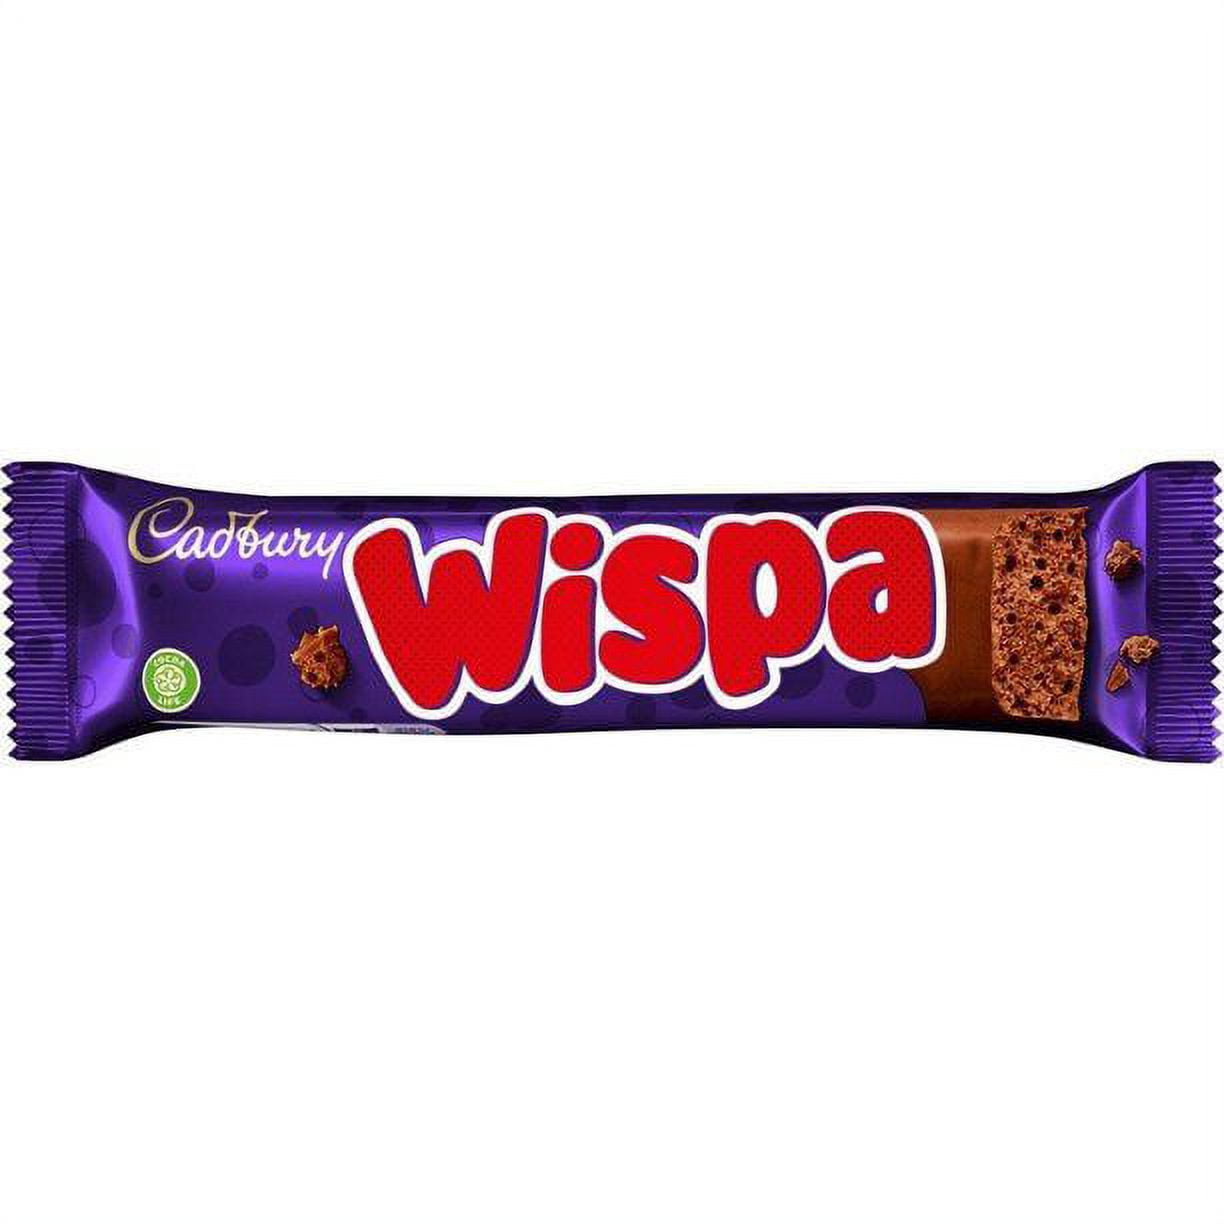 Cadburys Wispa Gold | Total 4 bars of British Chocolate Candy - Cadbury  Wispa Gold 48g each